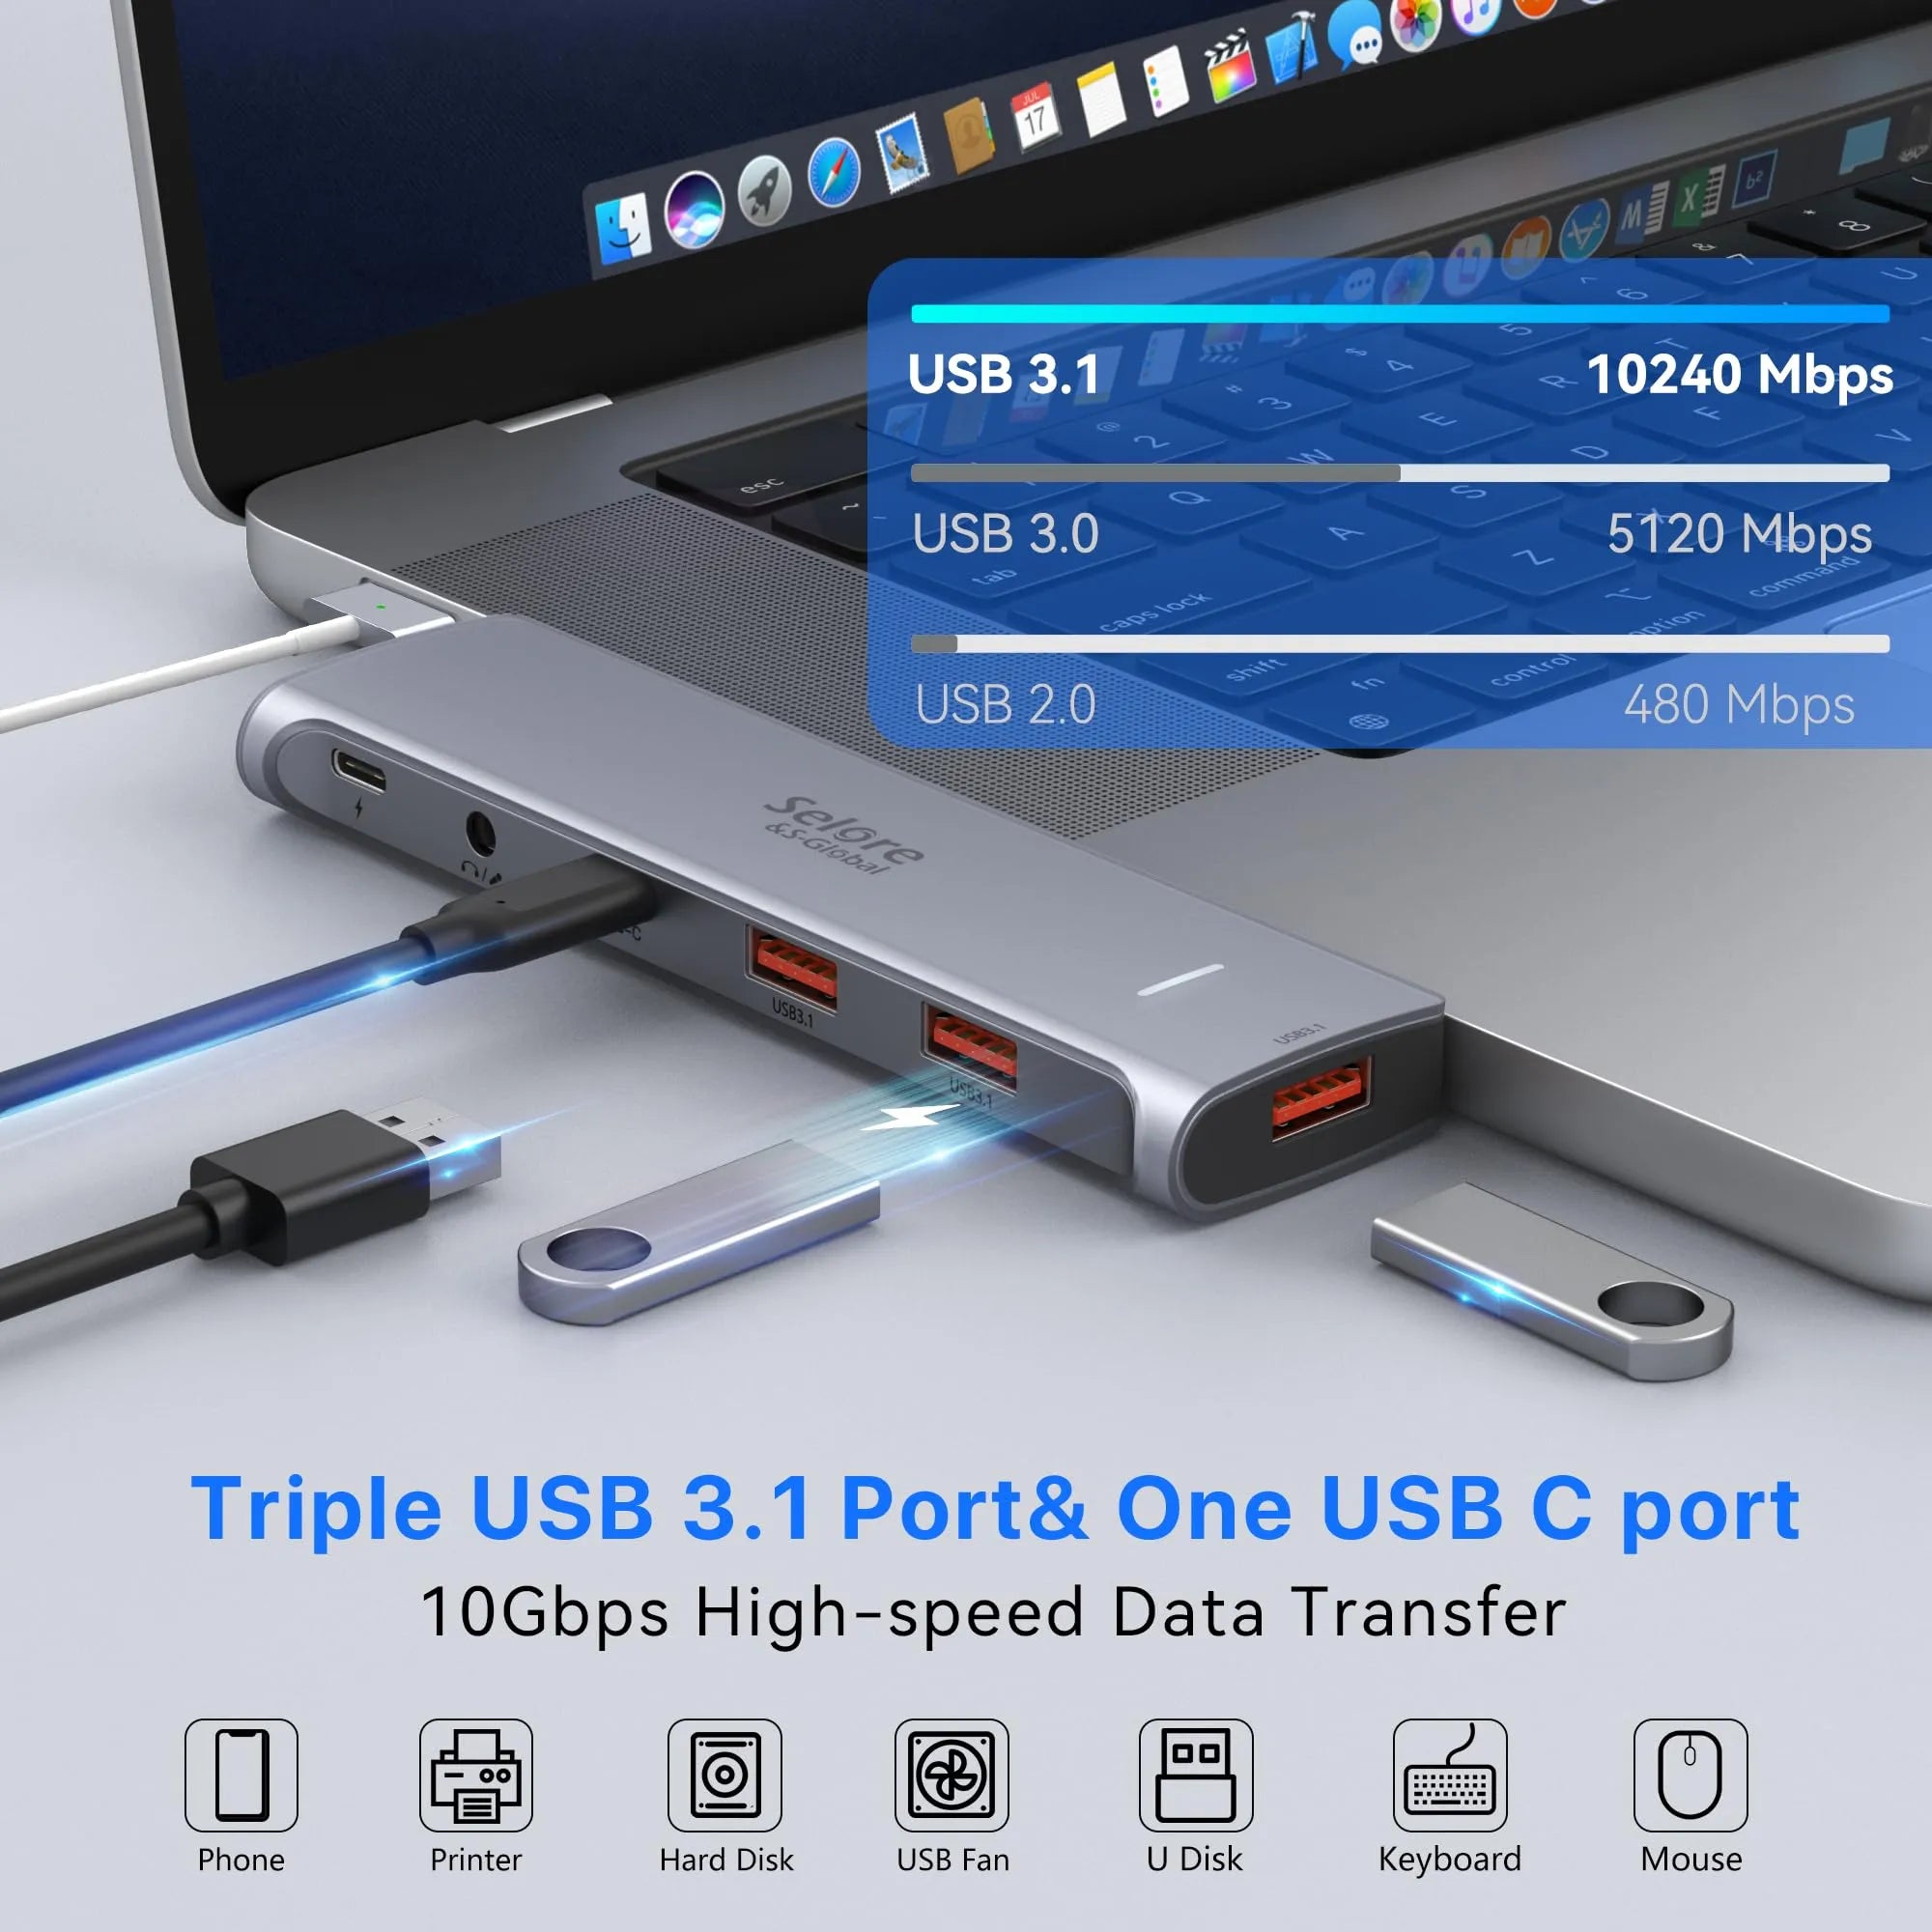 Adaptateur multiport pour MacBook Pro hub USB C en aluminium 6 en 1